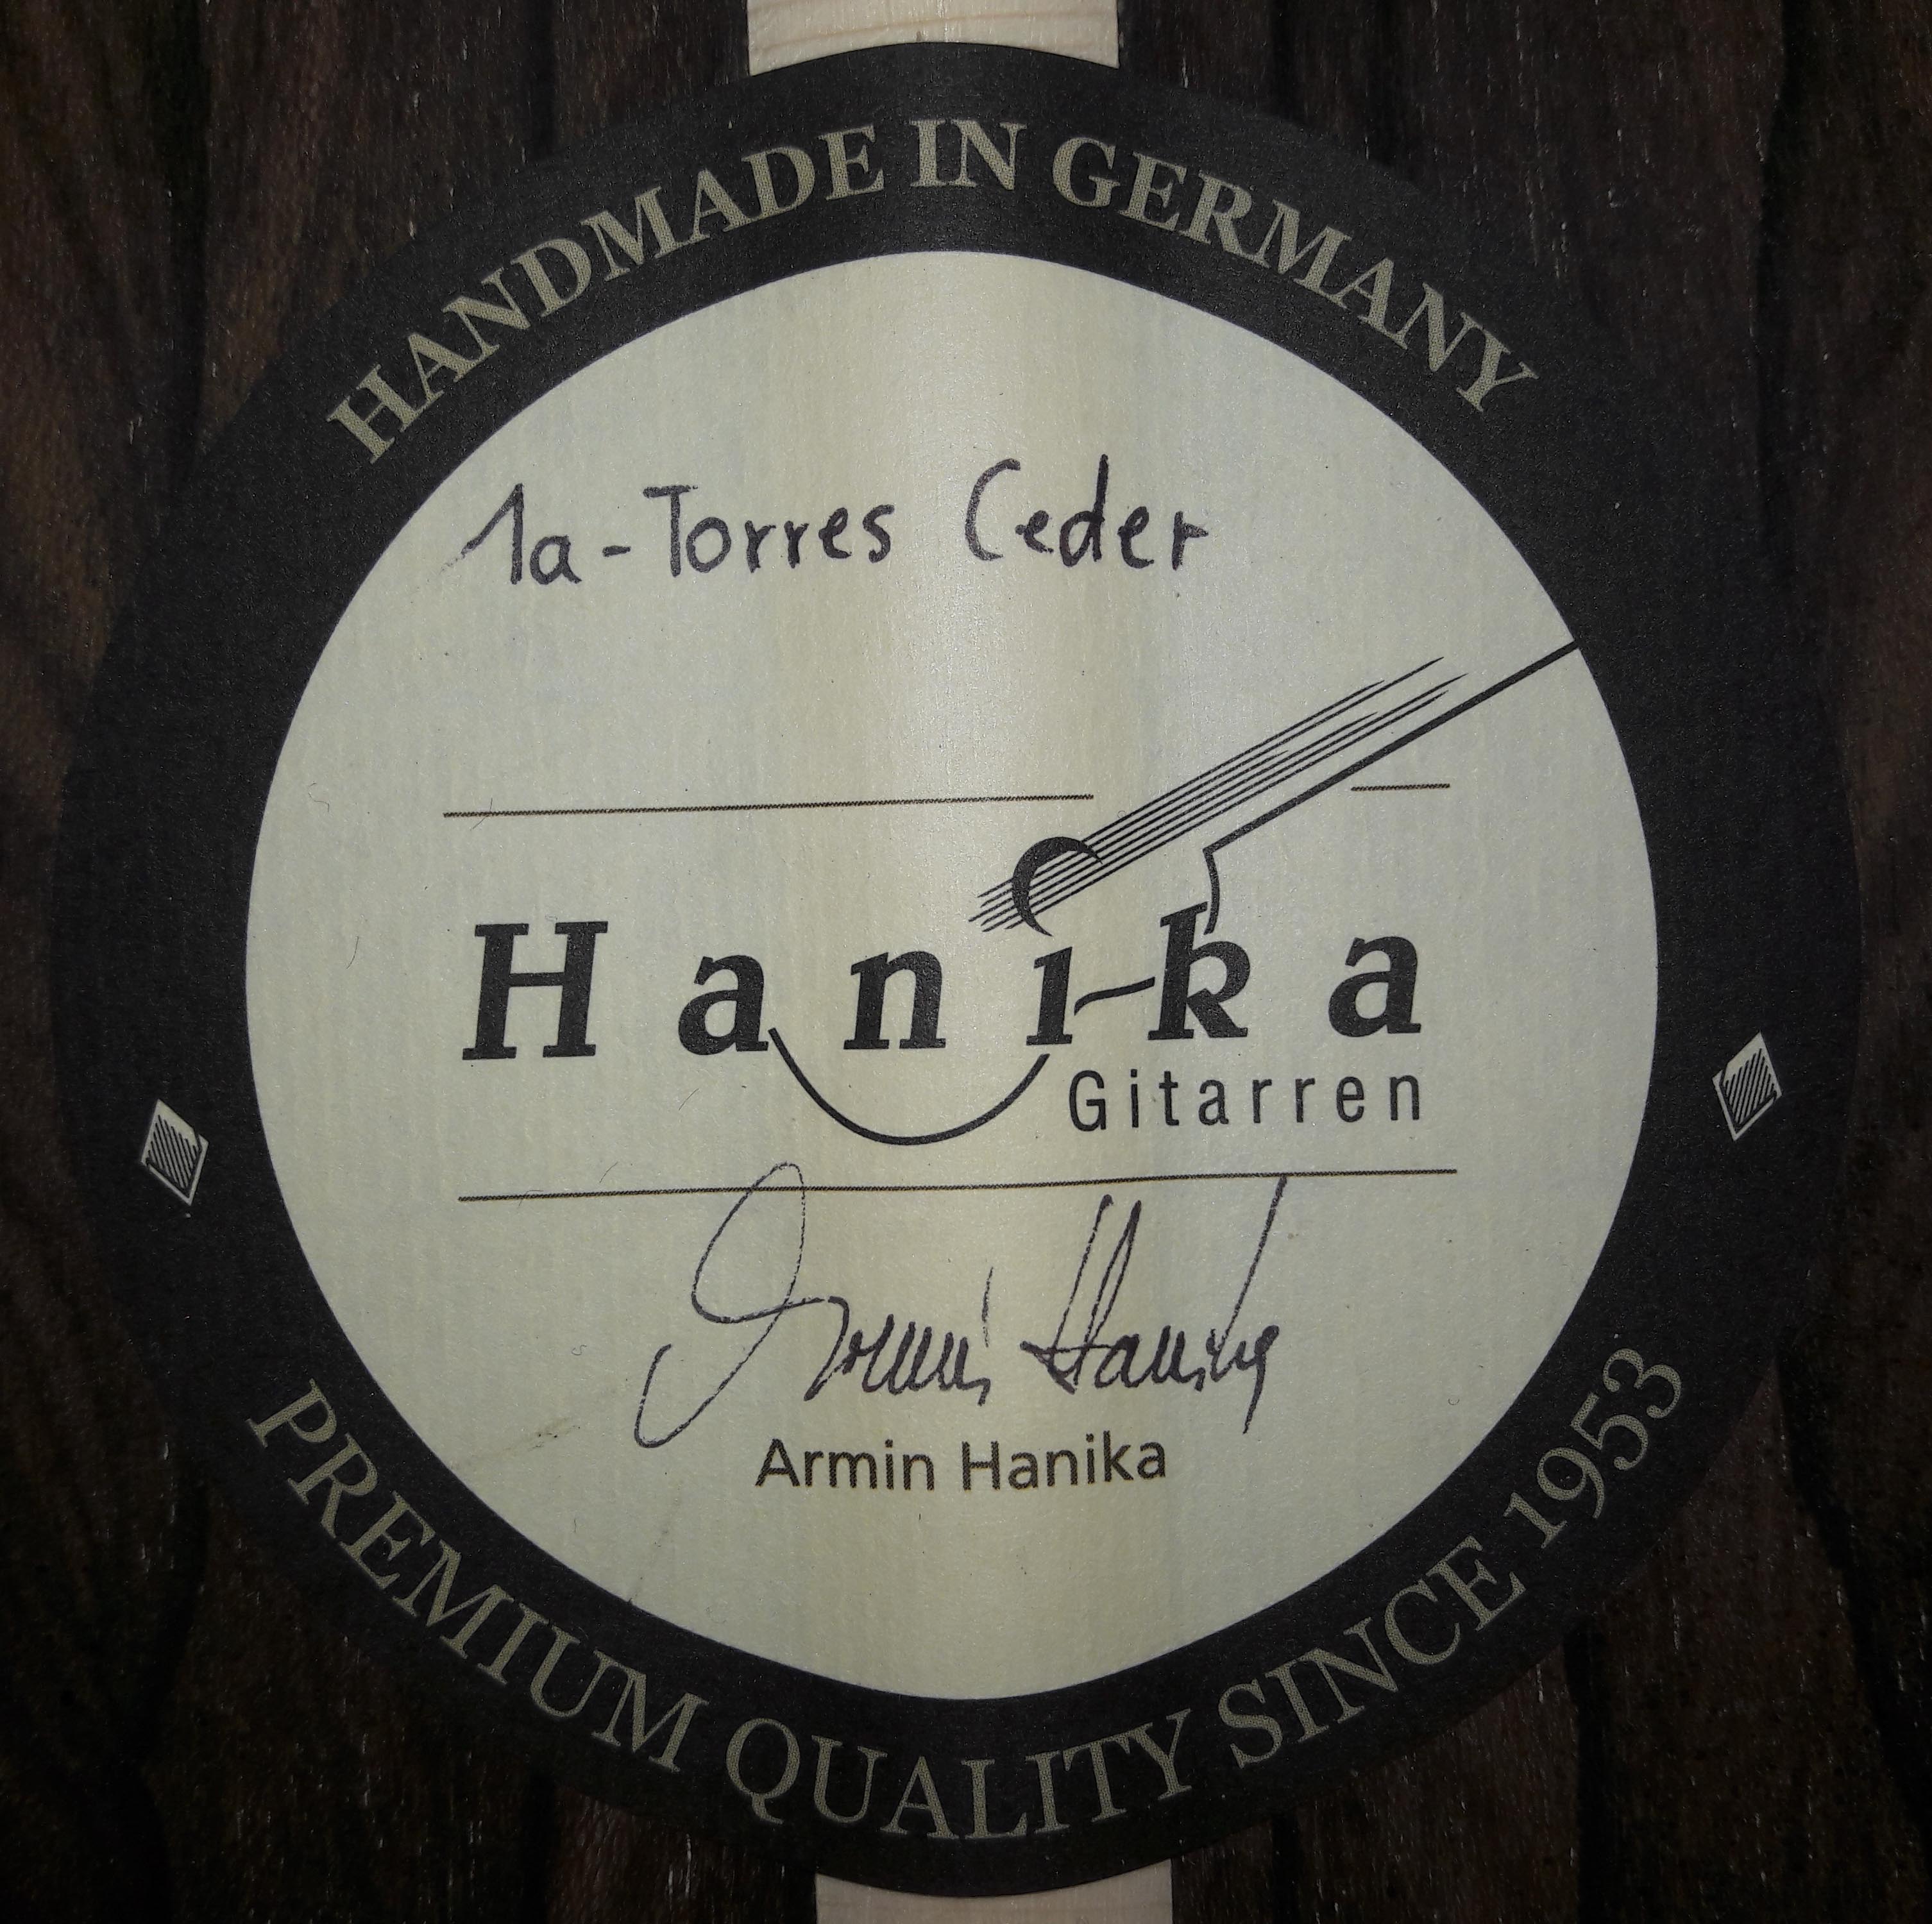 a armin hanika 1a torres cedar 26032018 label